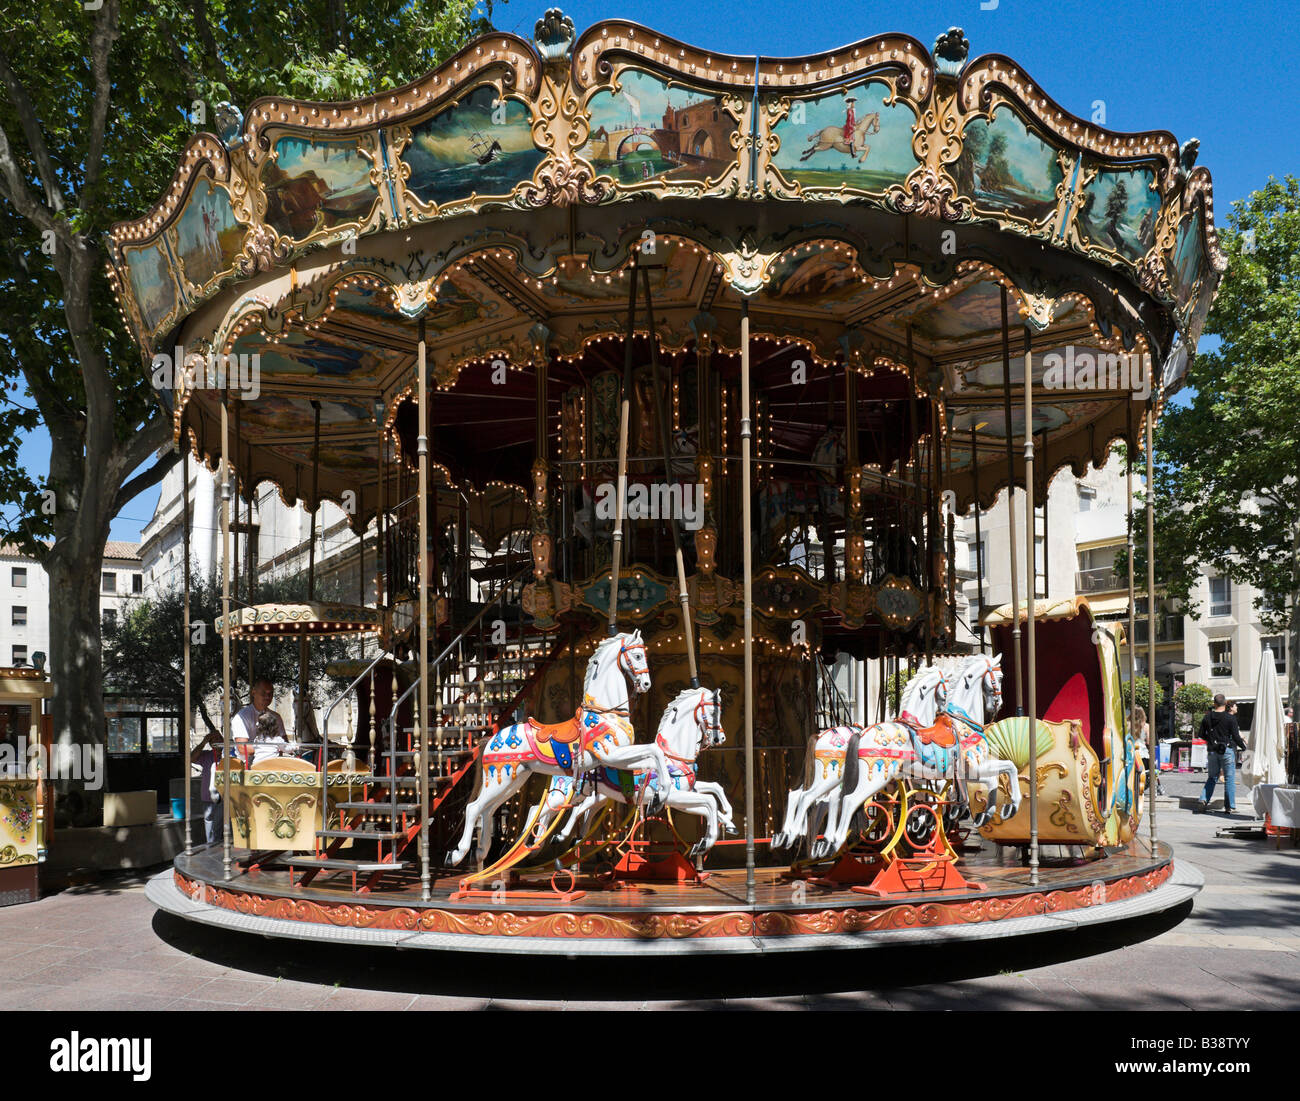 Carousel in front of the Hotel de Ville, Place d l'Horloge, Avignon, Provence, France Stock Photo